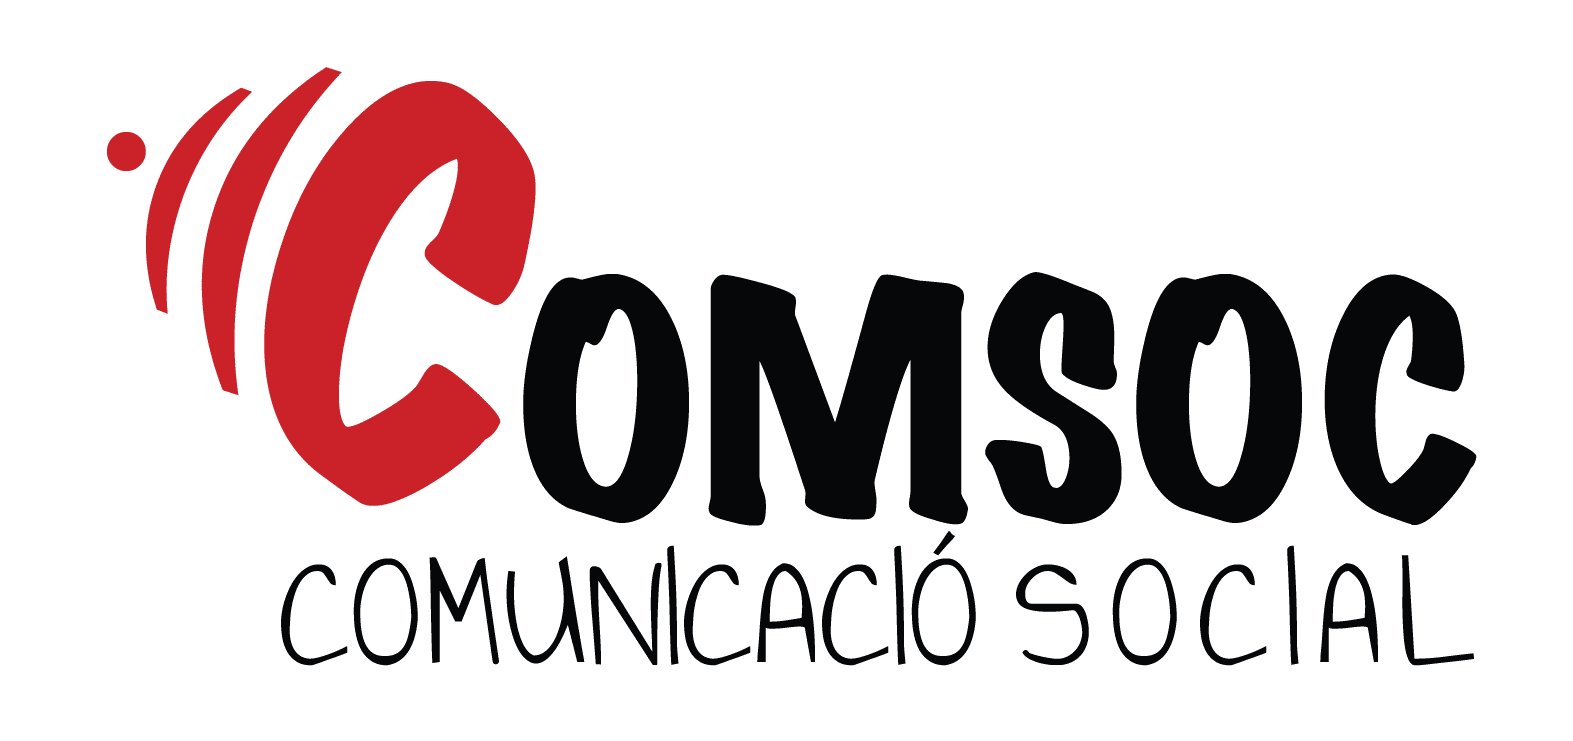 COMSOC-1